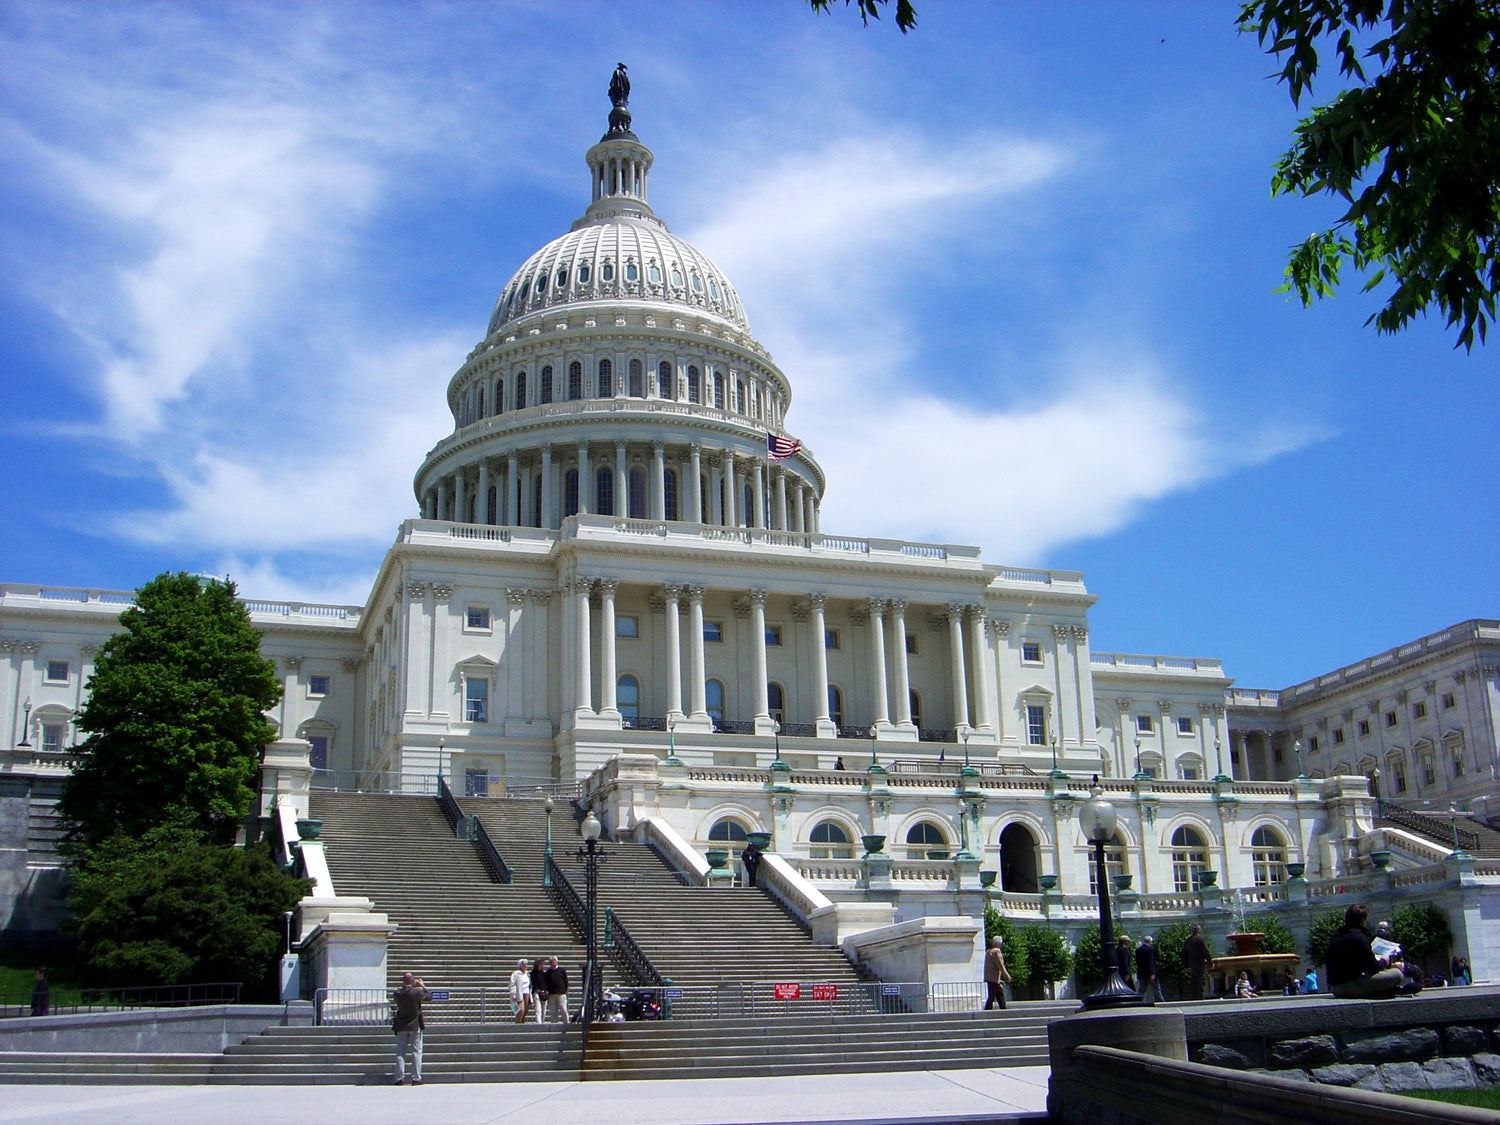 Senators in the U.S. Congress grow impatient at lack of hemp clarity from FDA